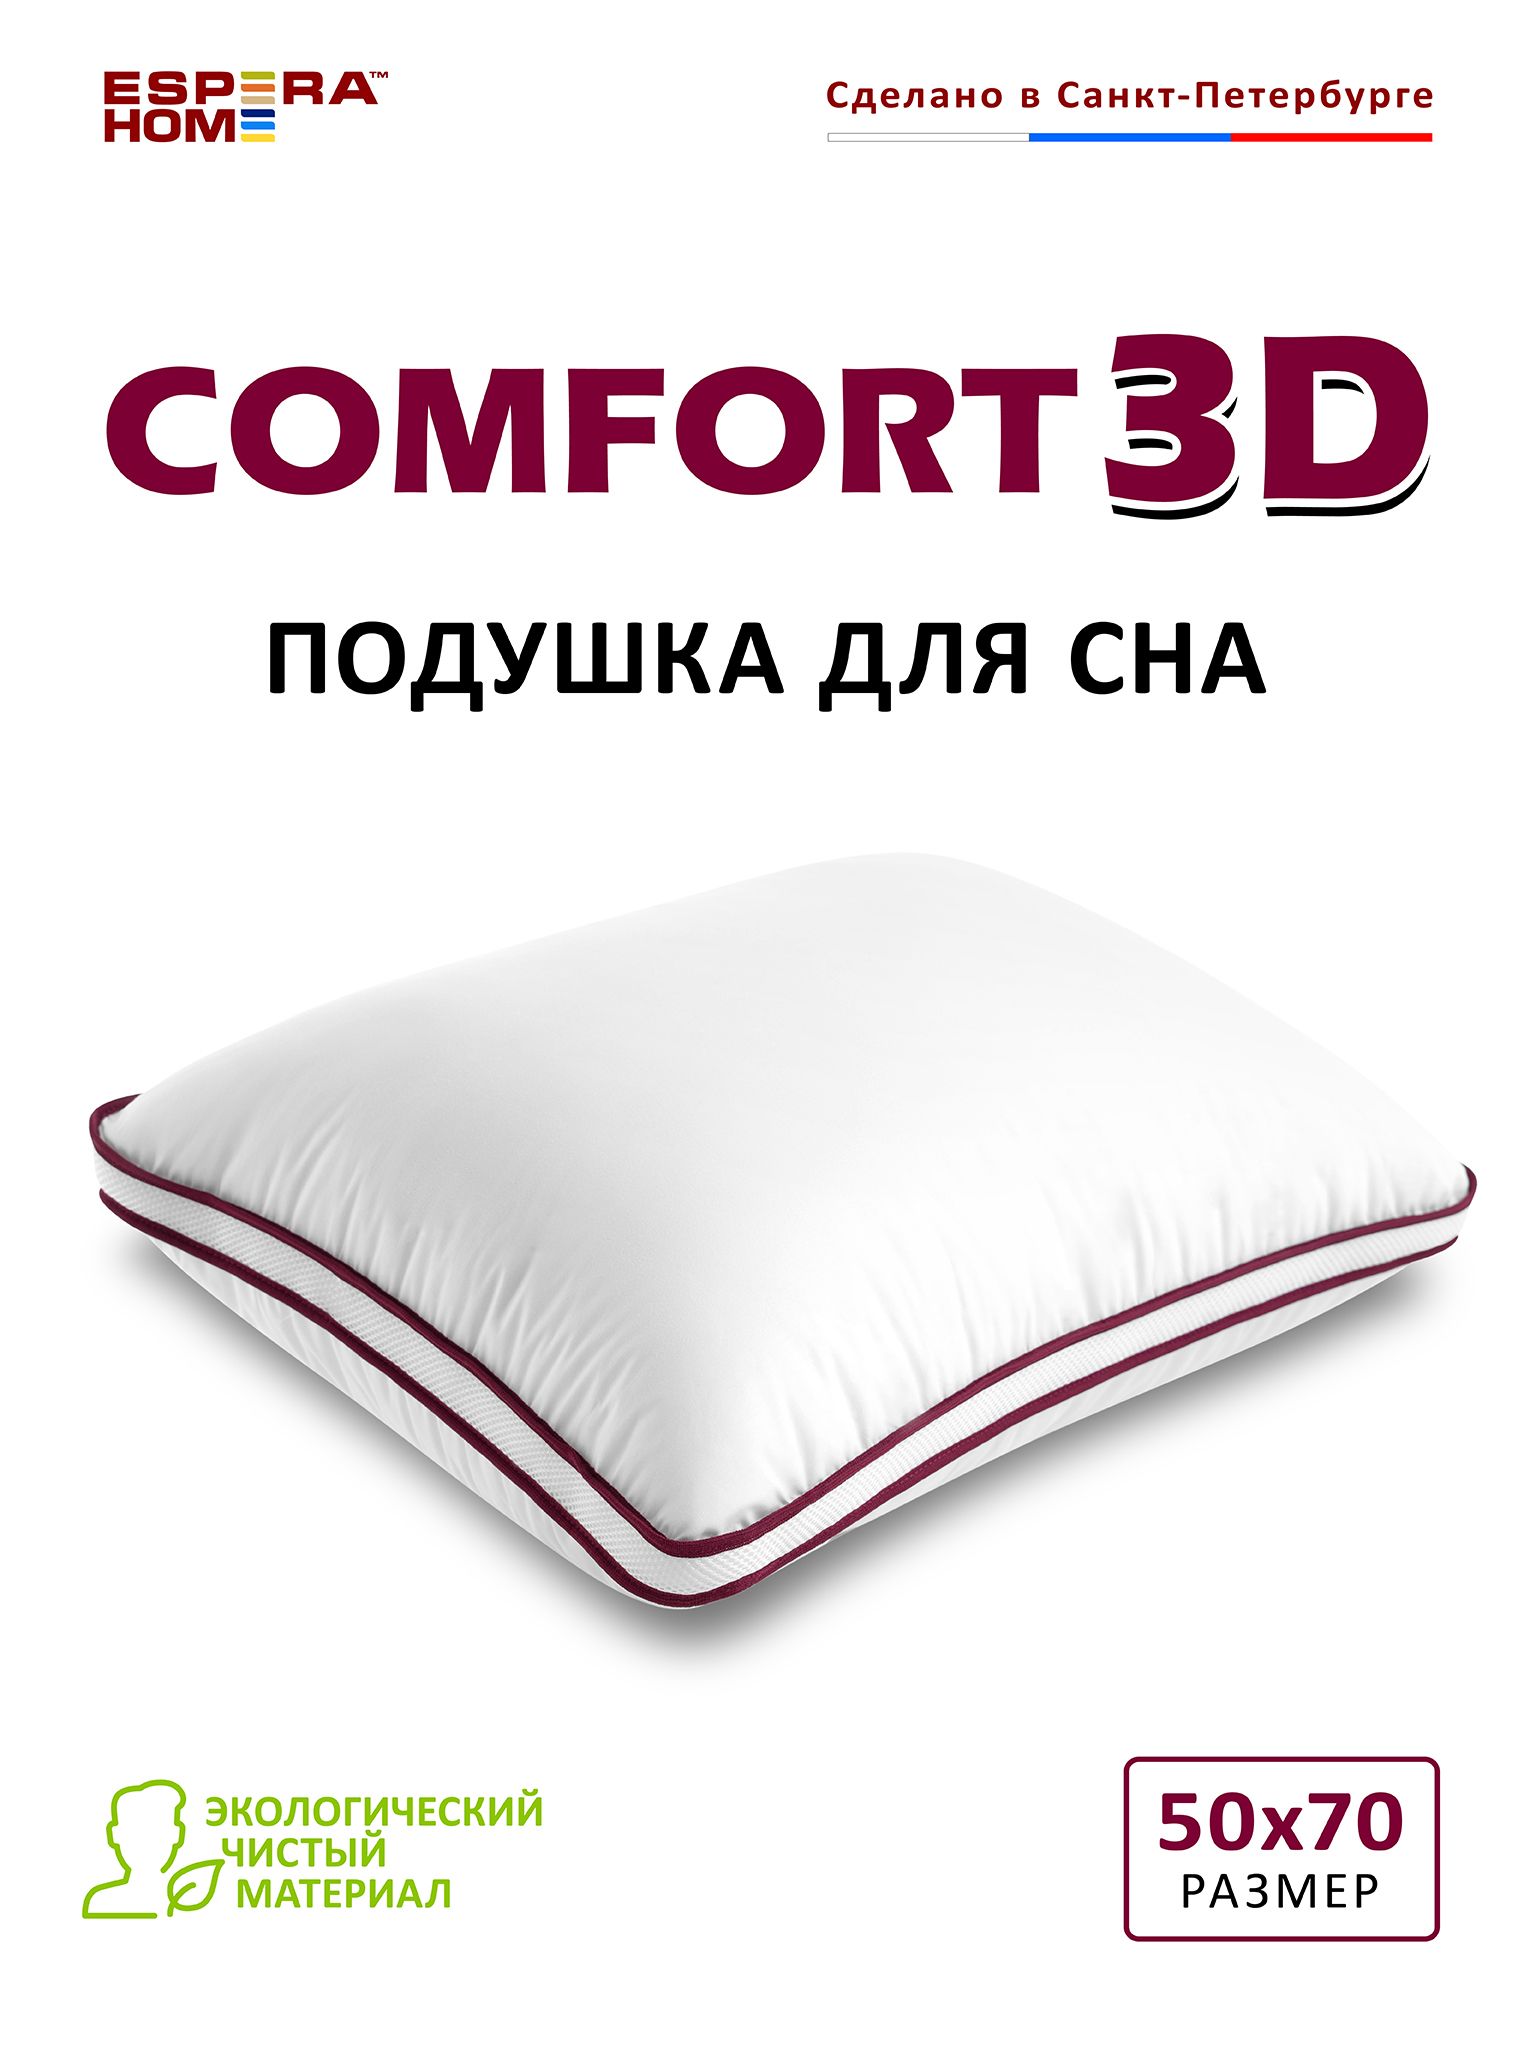 Подушки для сна ESPERA -  подушку для сна ЭСПЕРА в интернет .